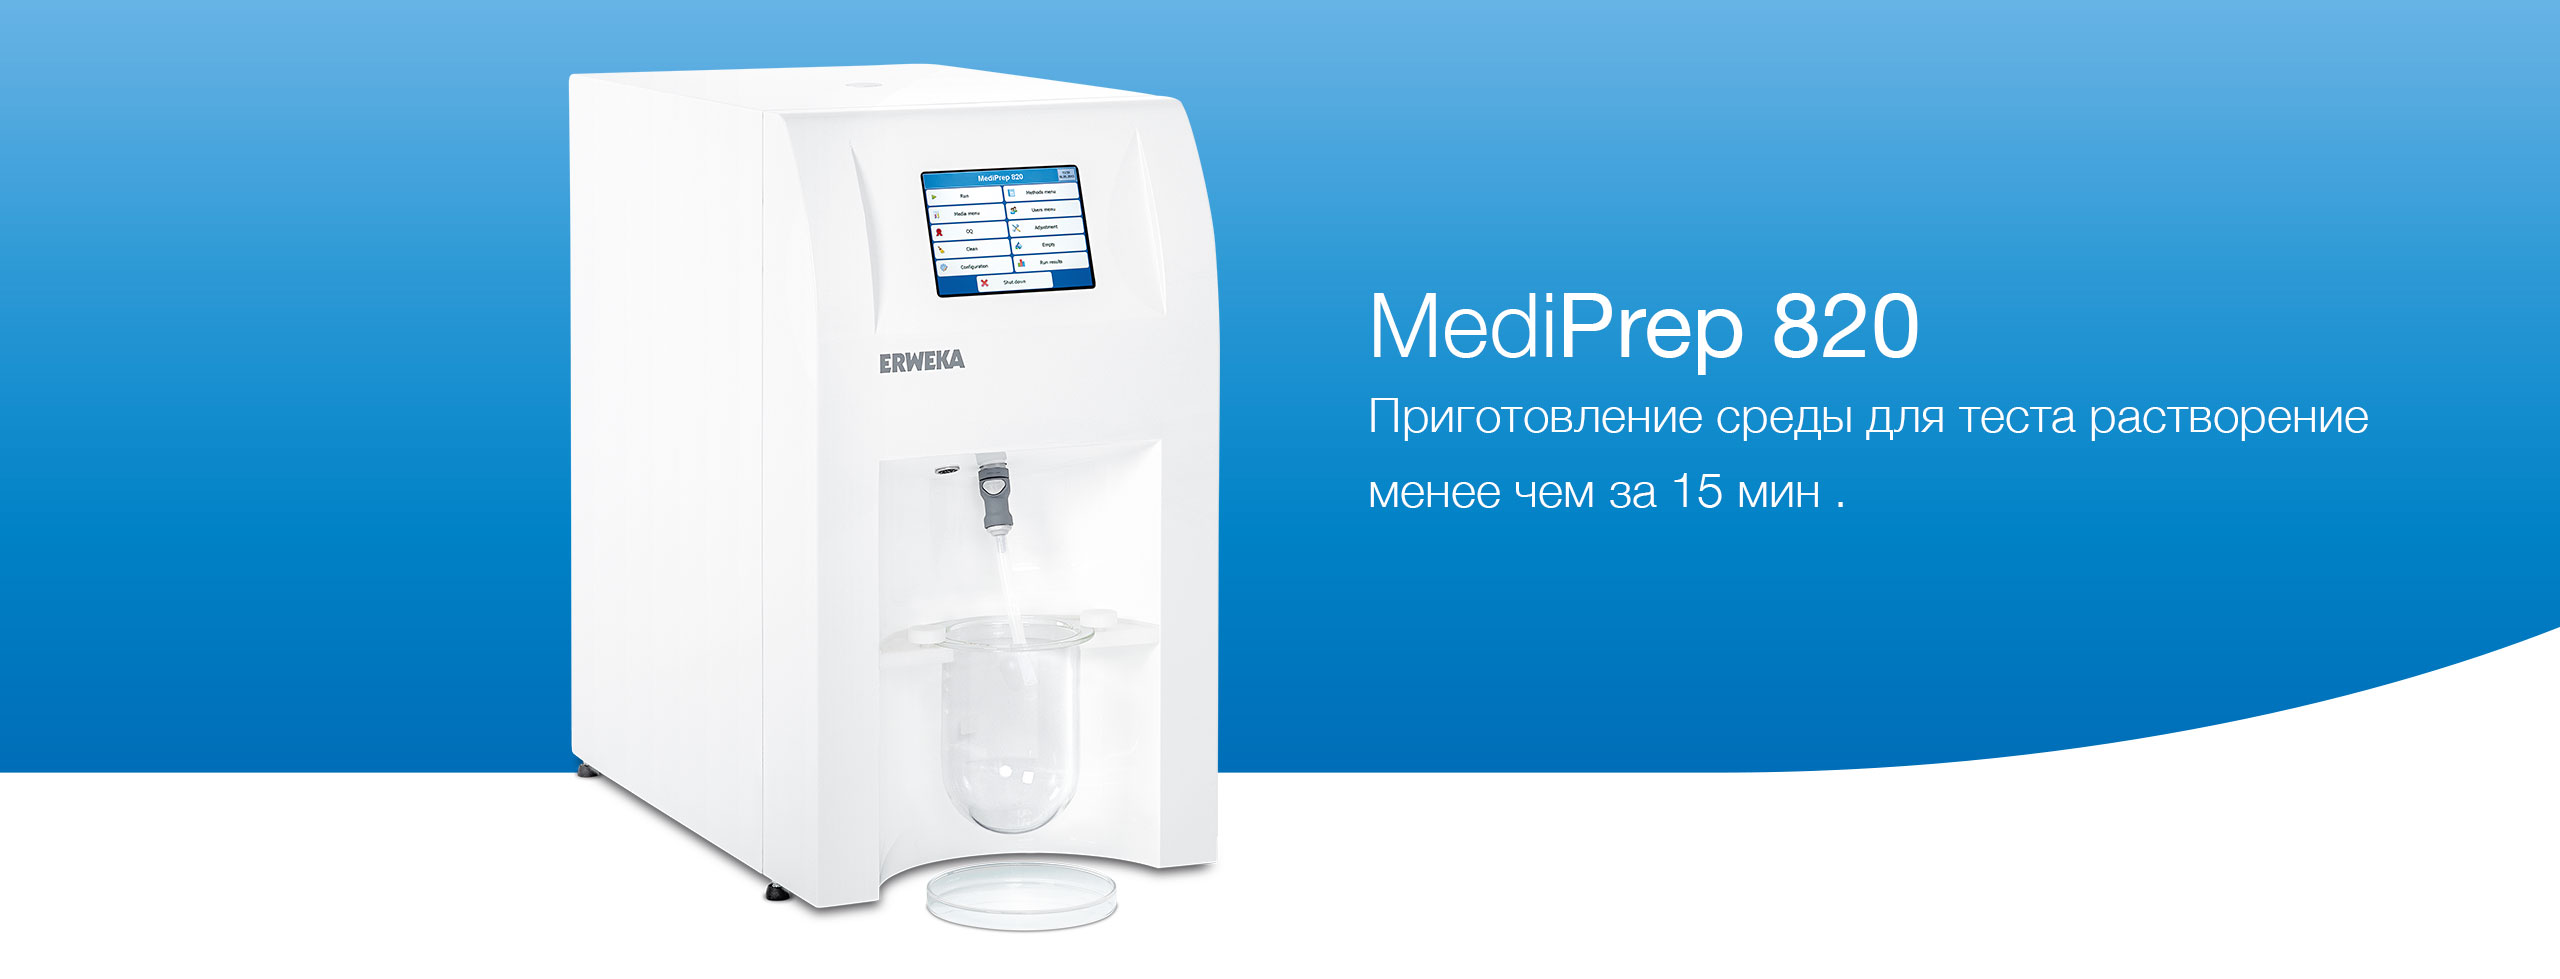 MediPrep 820 Product Page